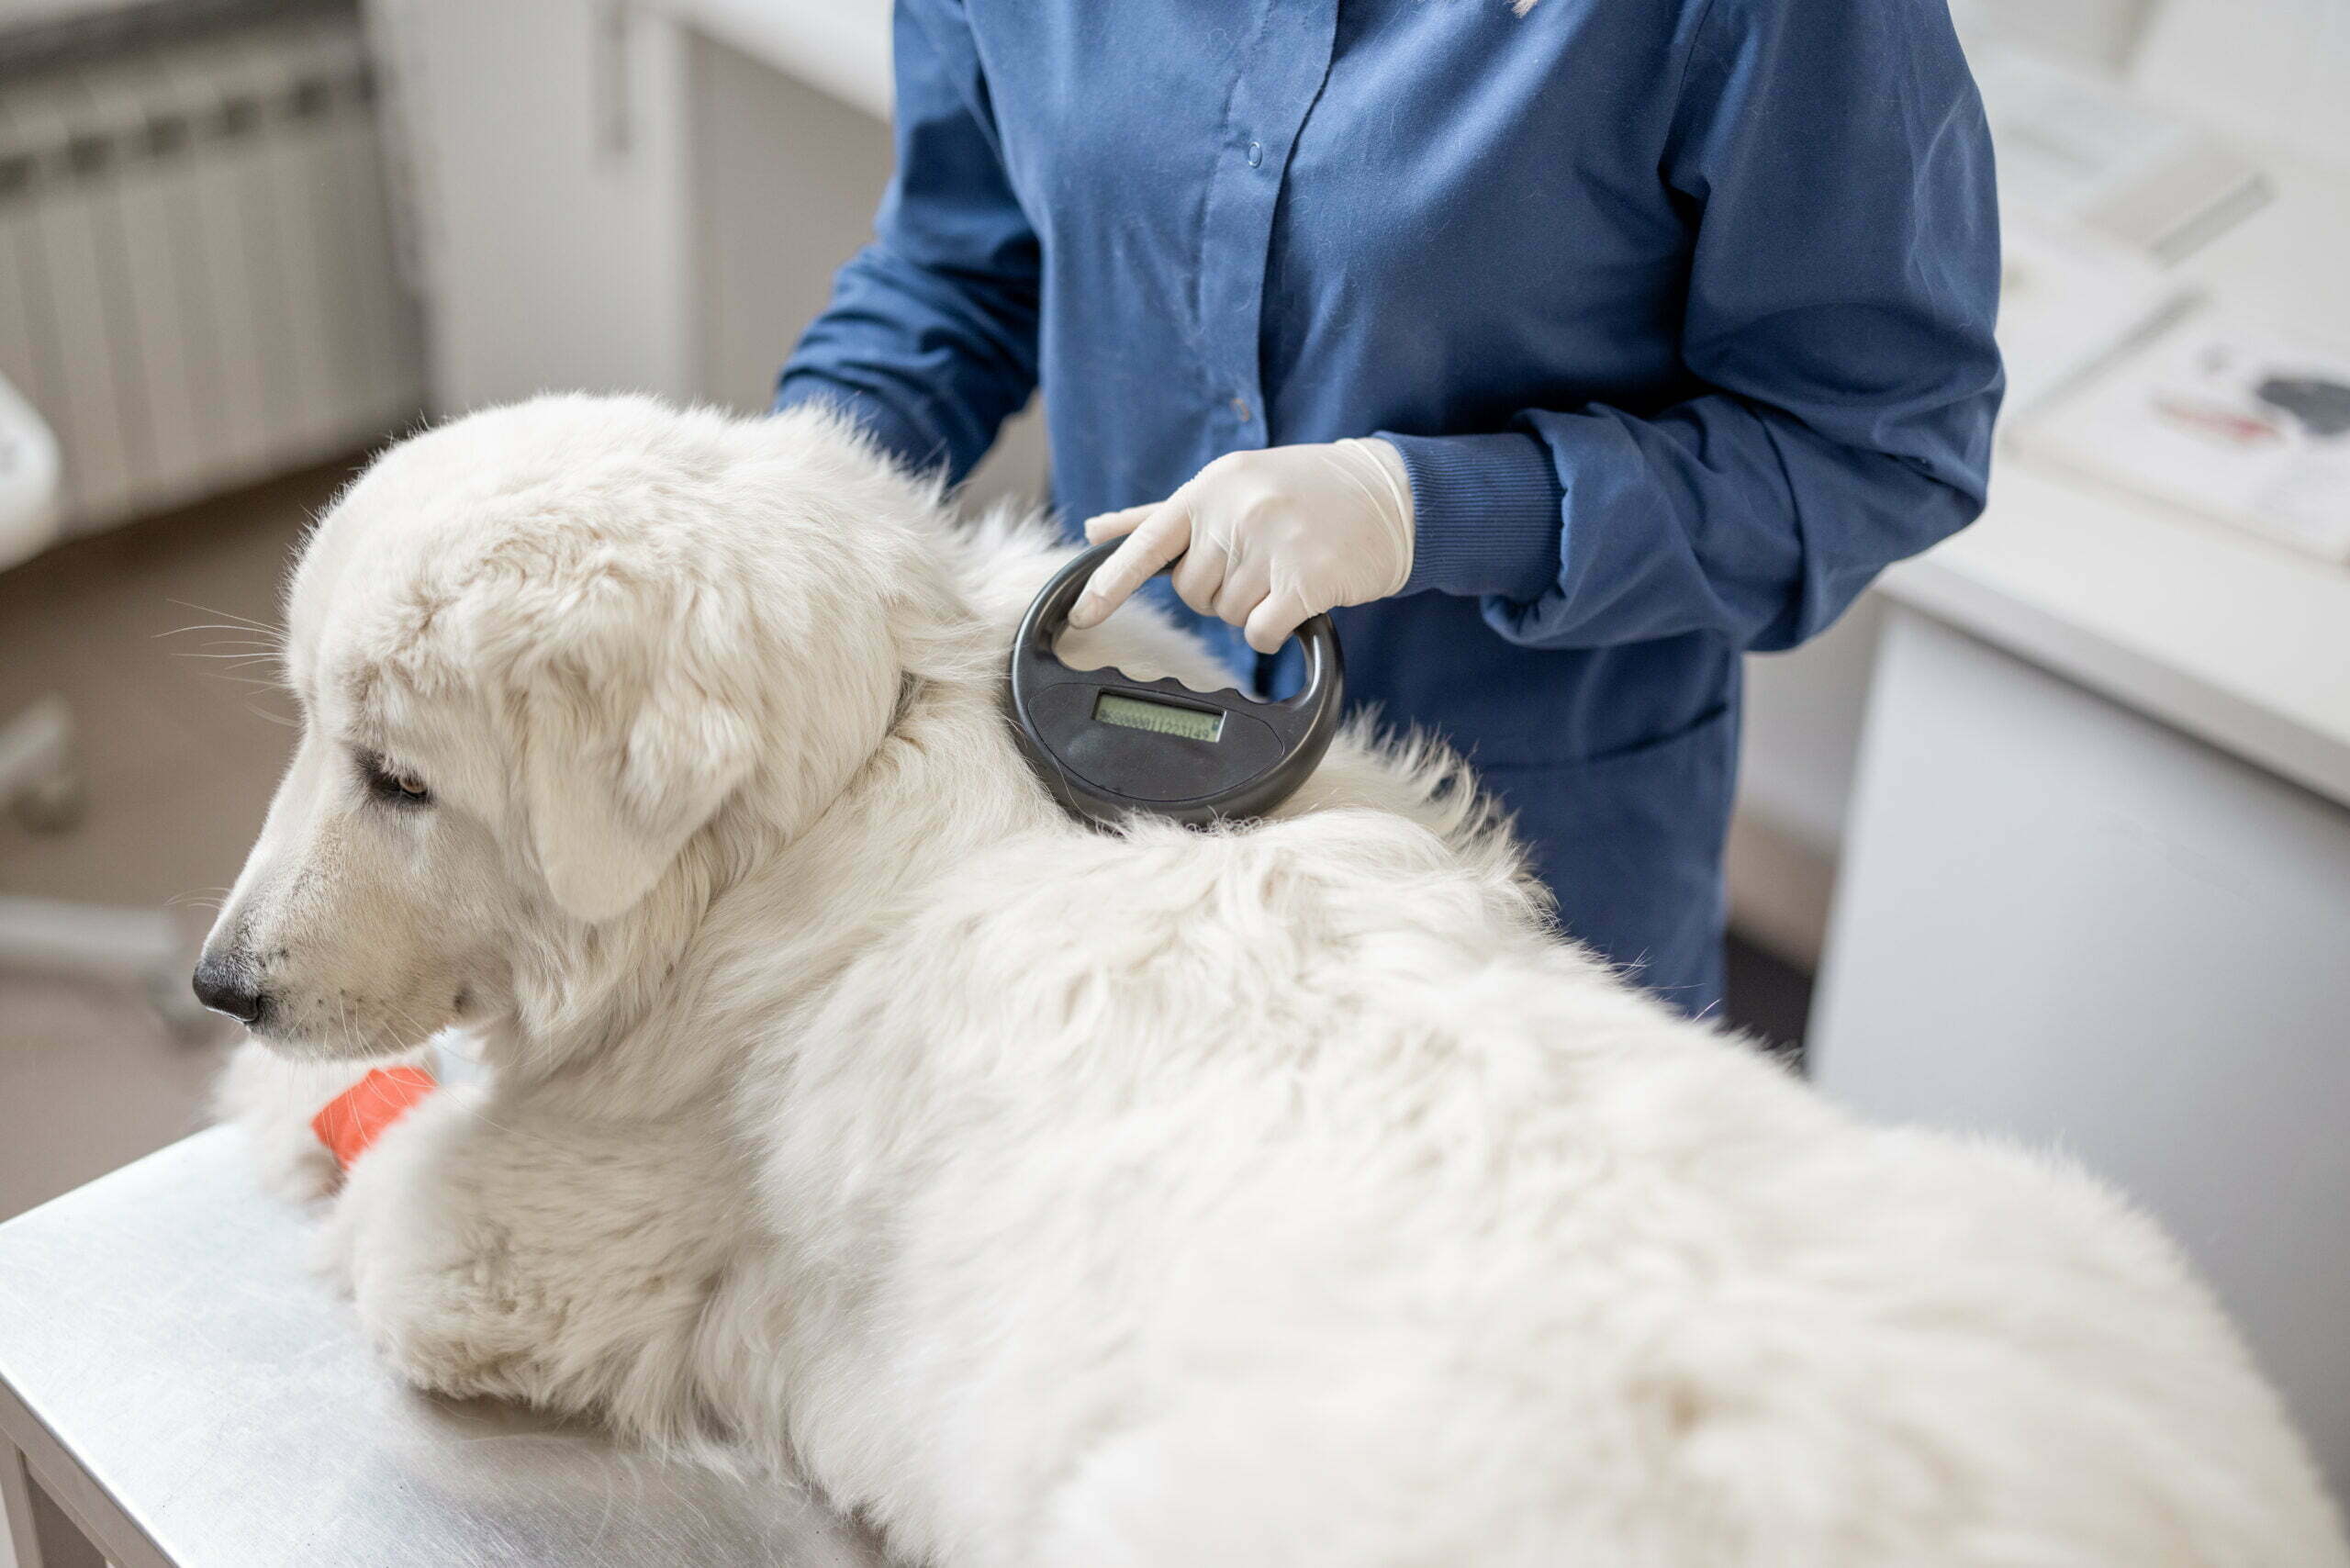 veterinarian checking microchip implant under shee 2021 09 04 07 49 24 utc